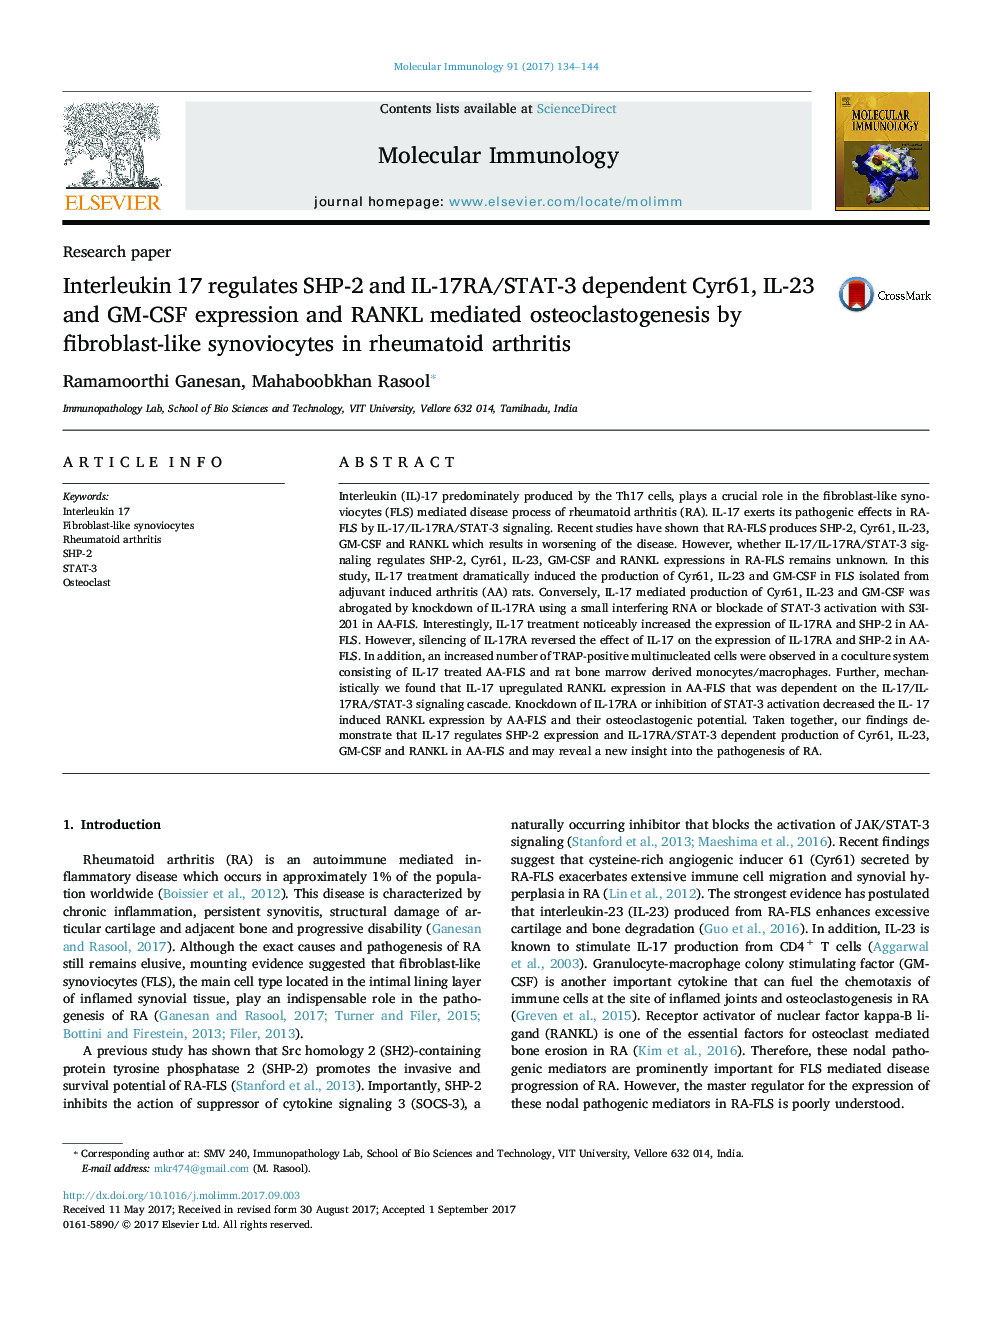 Interleukin 17 regulates SHP-2 and IL-17RA/STAT-3 dependent Cyr61, IL-23 and GM-CSF expression and RANKL mediated osteoclastogenesis by fibroblast-like synoviocytes in rheumatoid arthritis